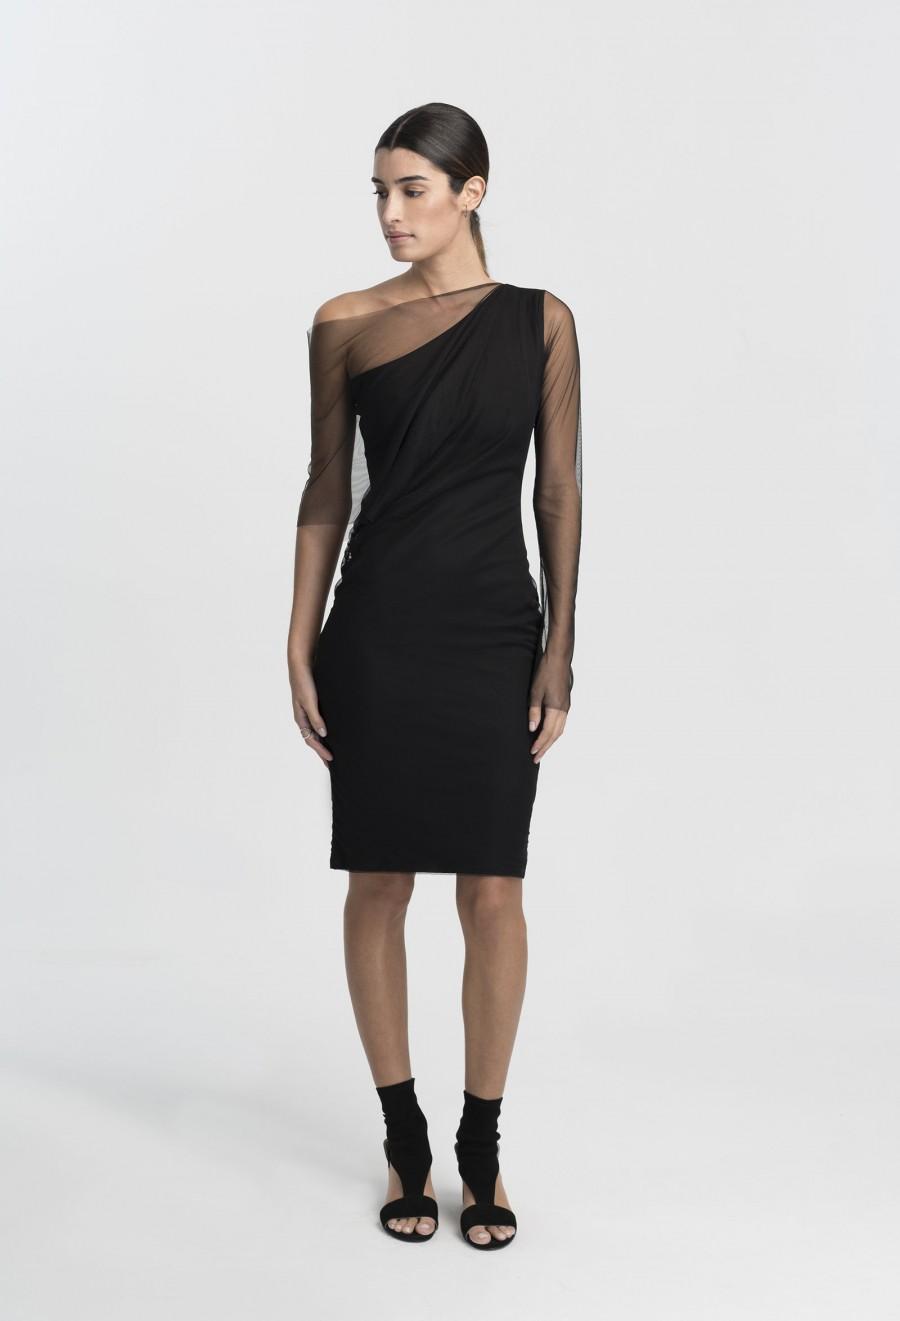 Mariage - Pencil Dress / Black Dress / One Shoulder Dress / Party Dress / Cocktail Dress / Evening Gown / Marcellamoda - MD1010